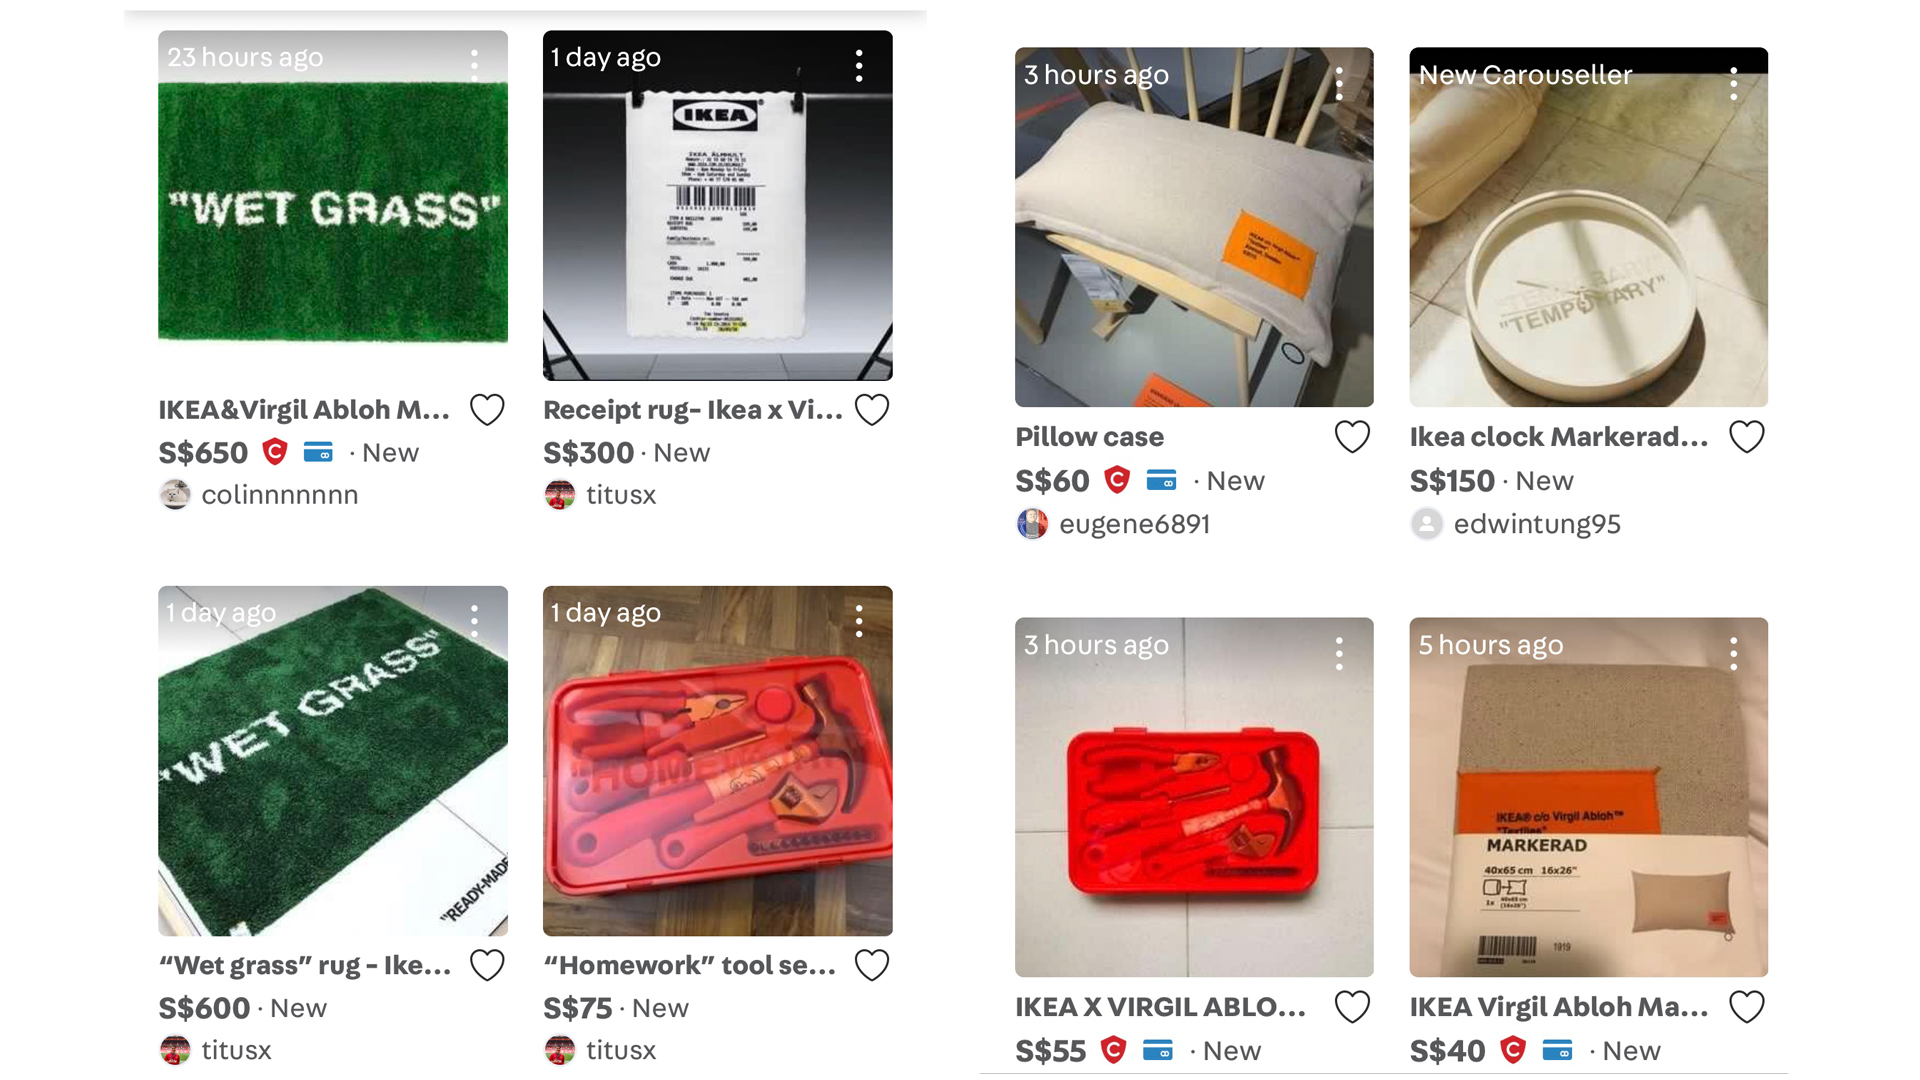 PHOTOS: Ikea x Virgil Abloh collection drops 31 October